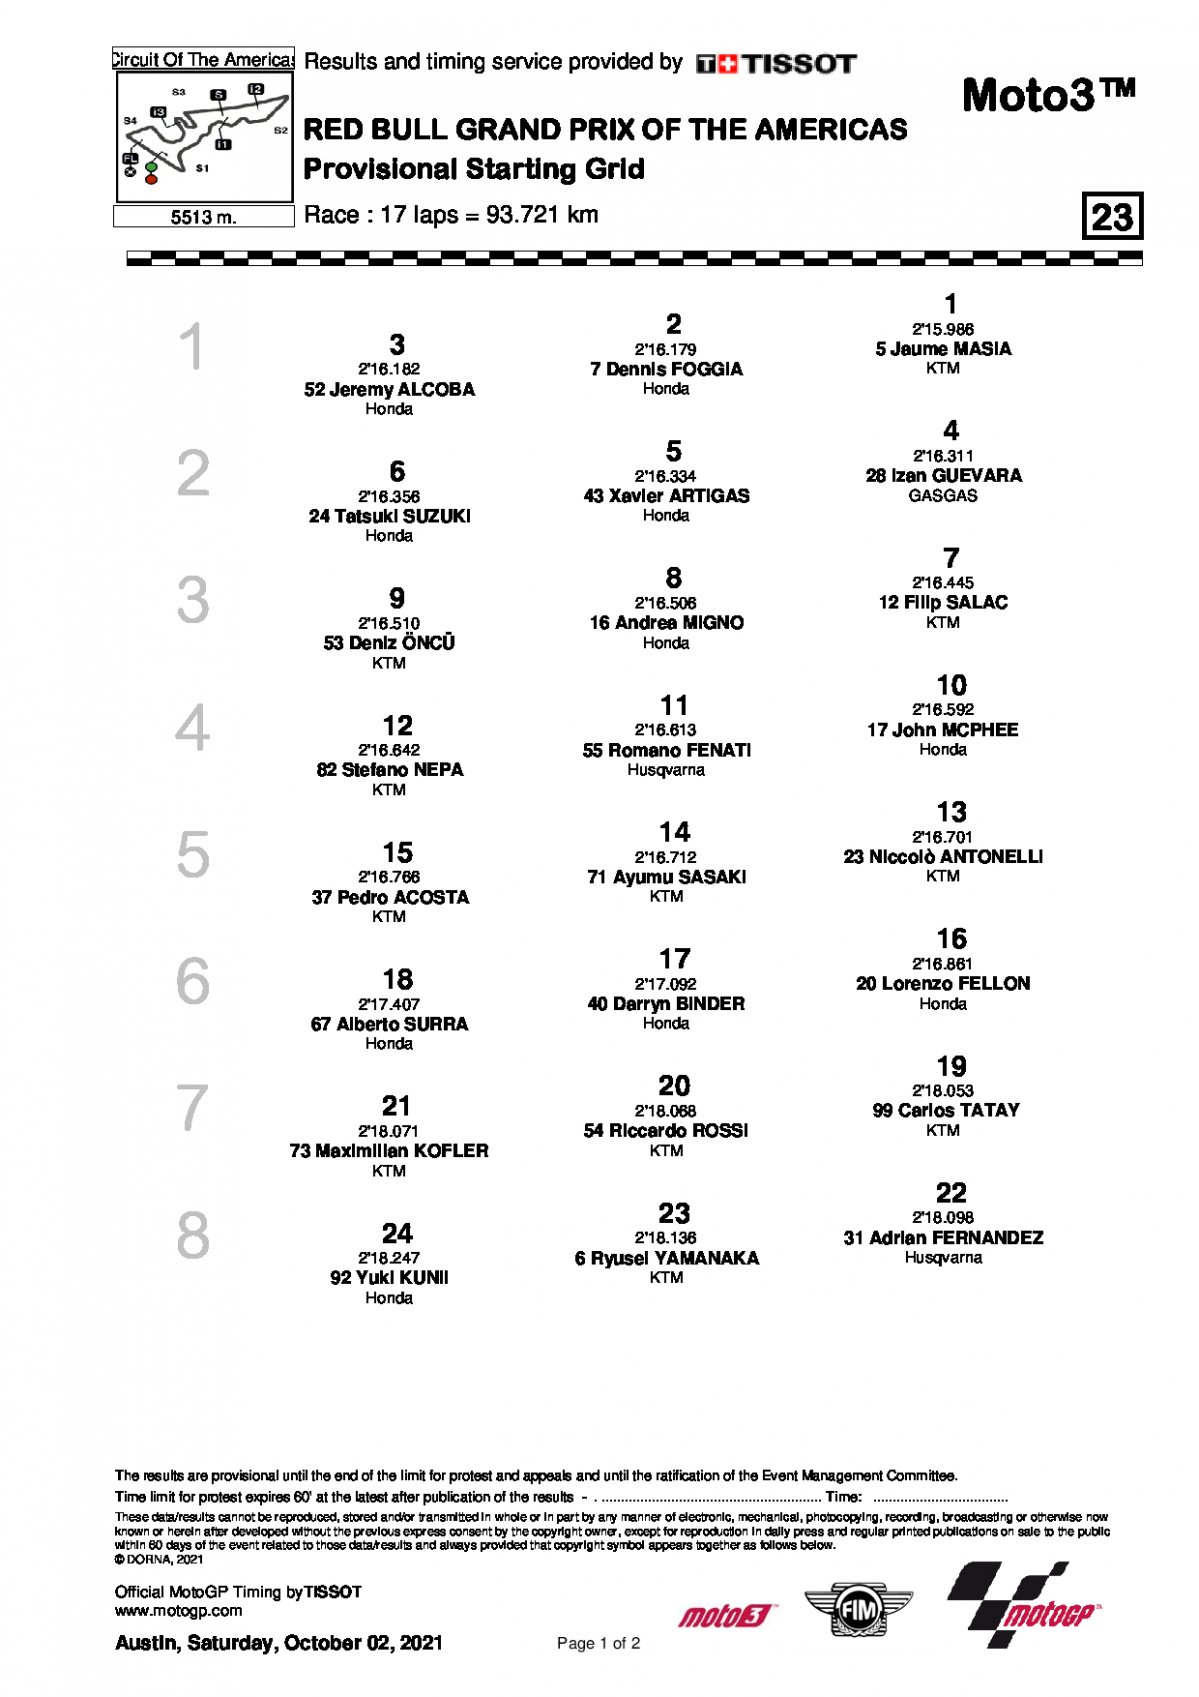 Стартовая решетка Гран-При Америк, Moto3 (3/10/2021)